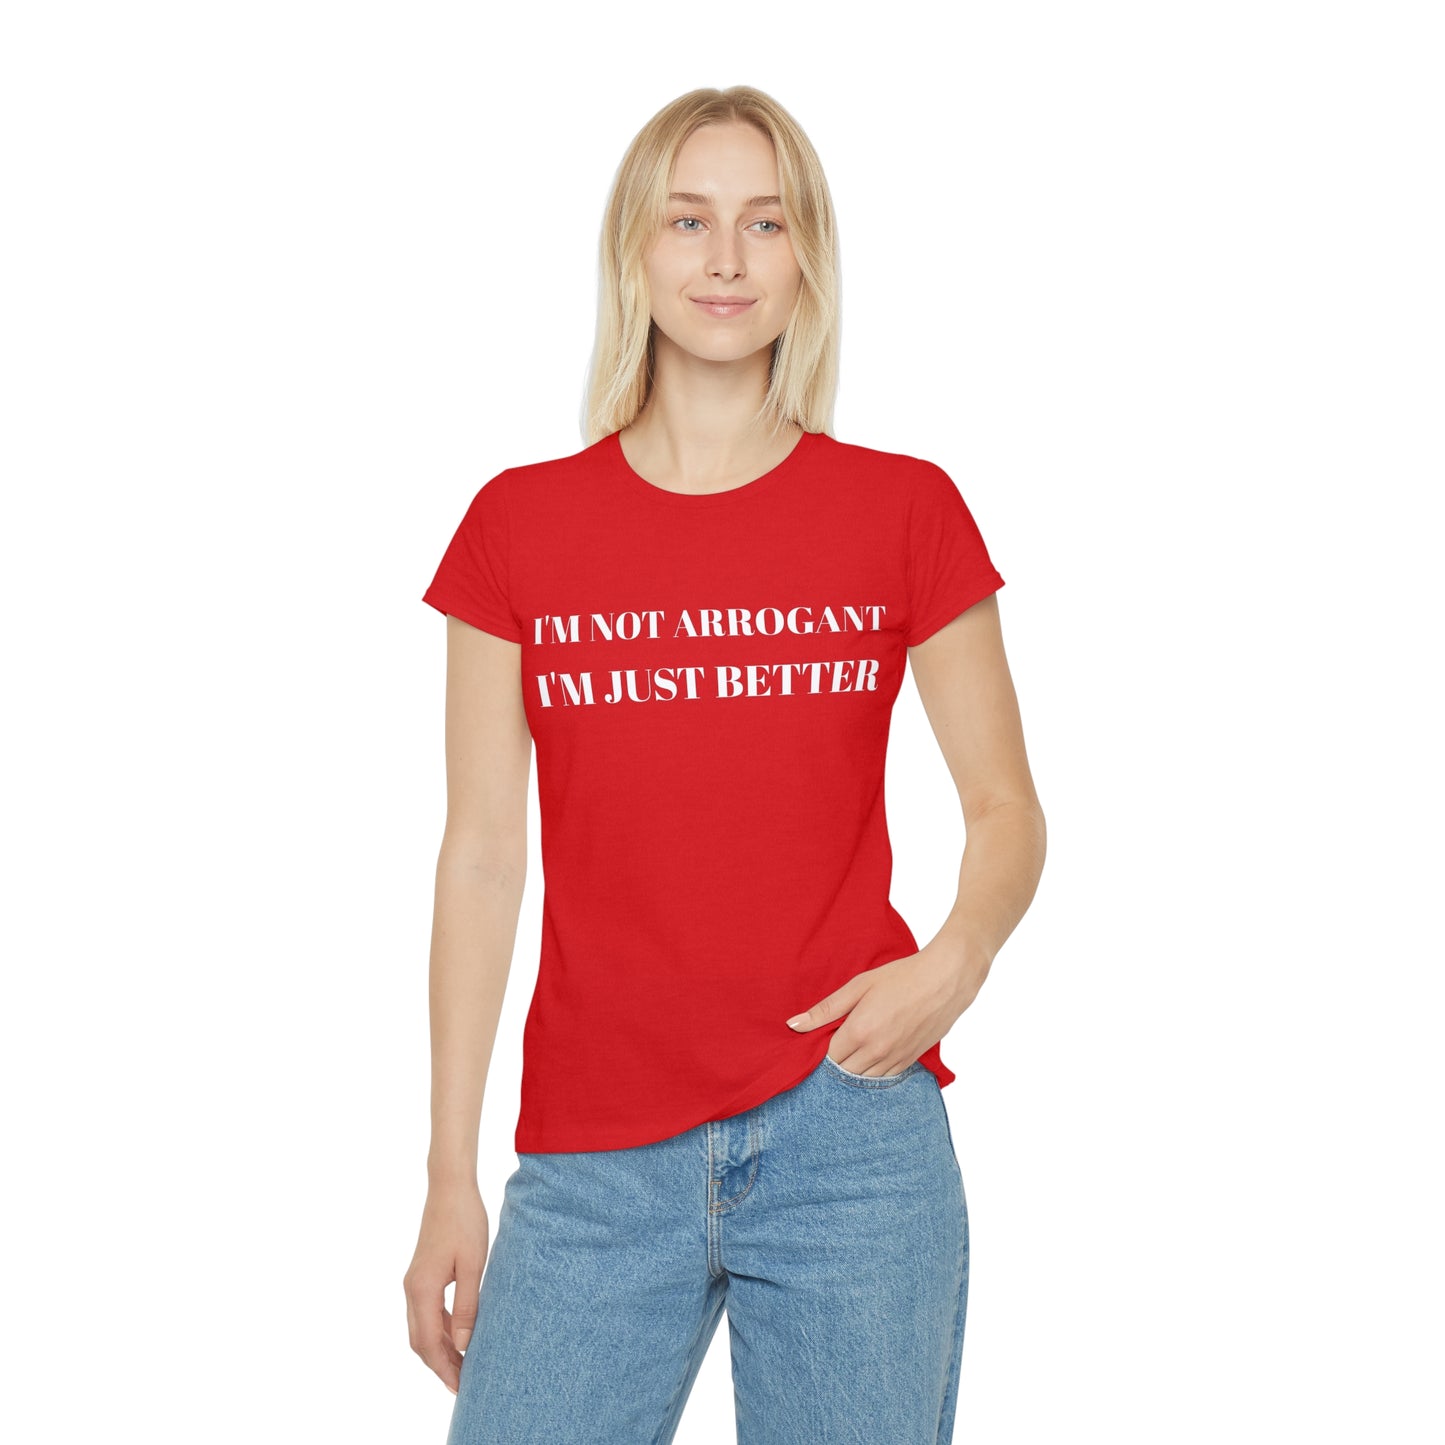 'I'M NOT ARROGANT, I'M JUST BETTER' Women's Iconic T-Shirt